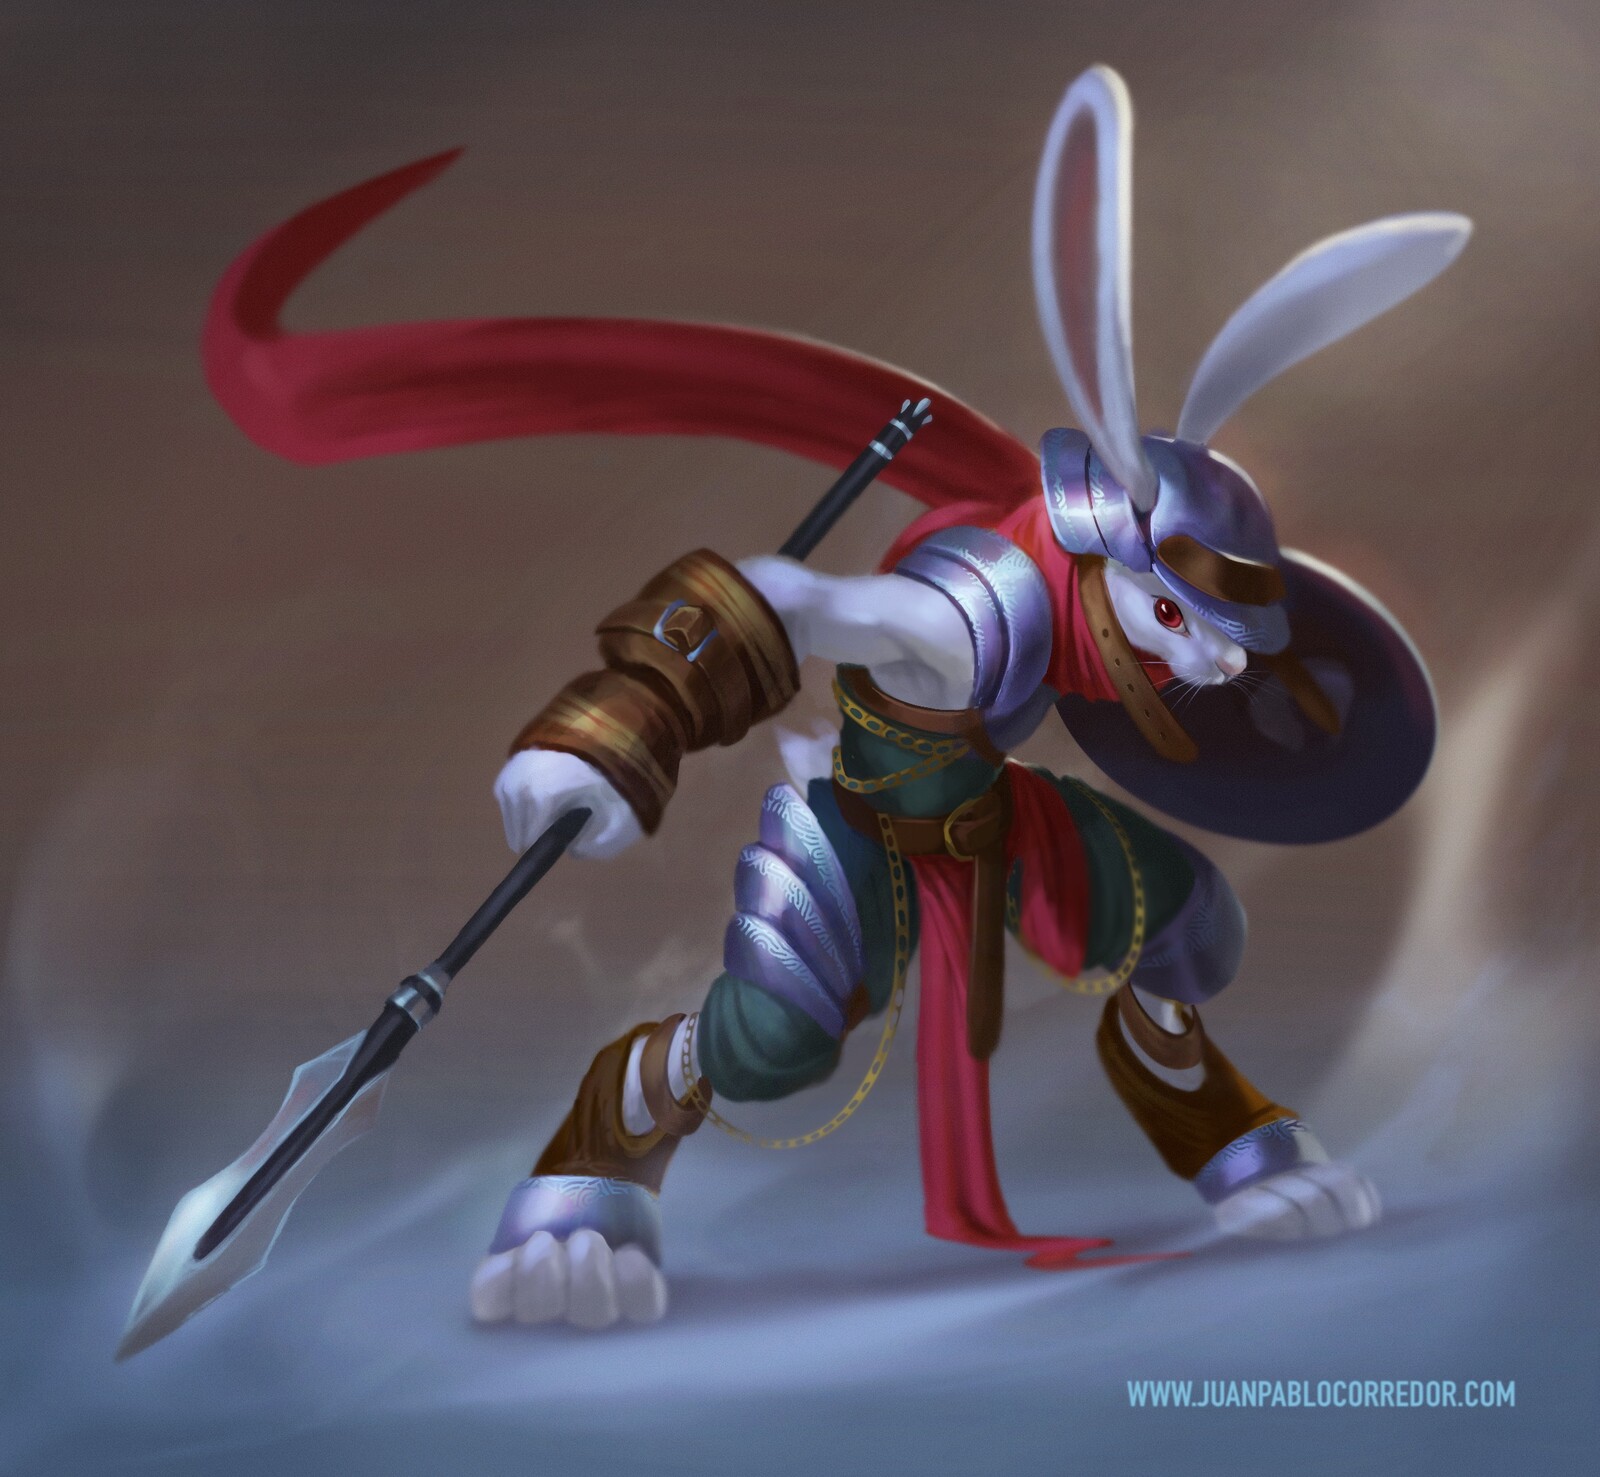 Rabbit knight. 🐰